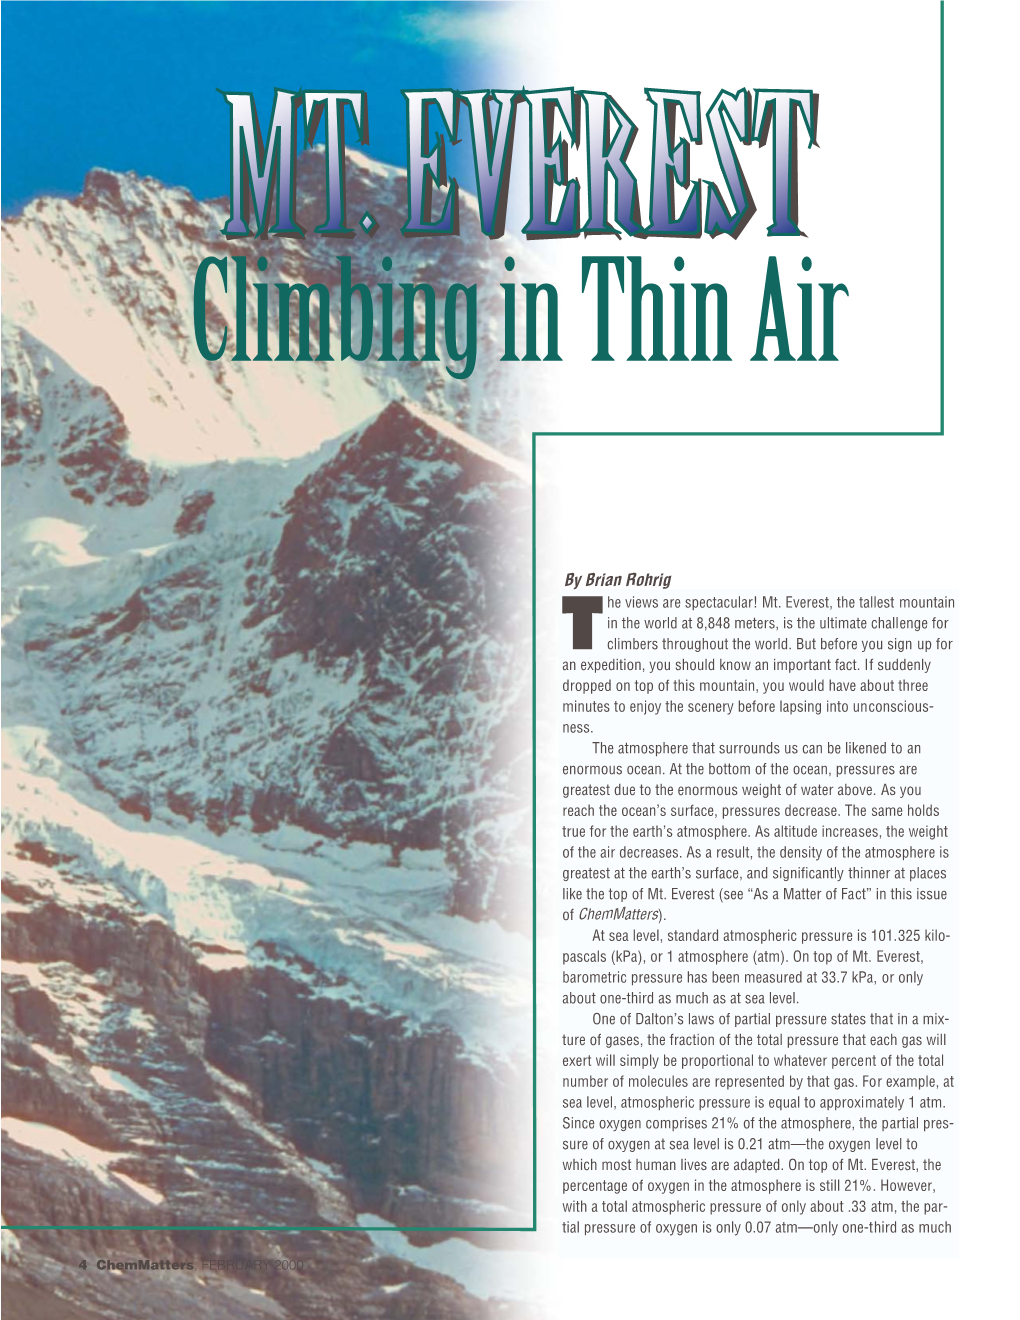 Mt. Everest: Climbing Into Thin